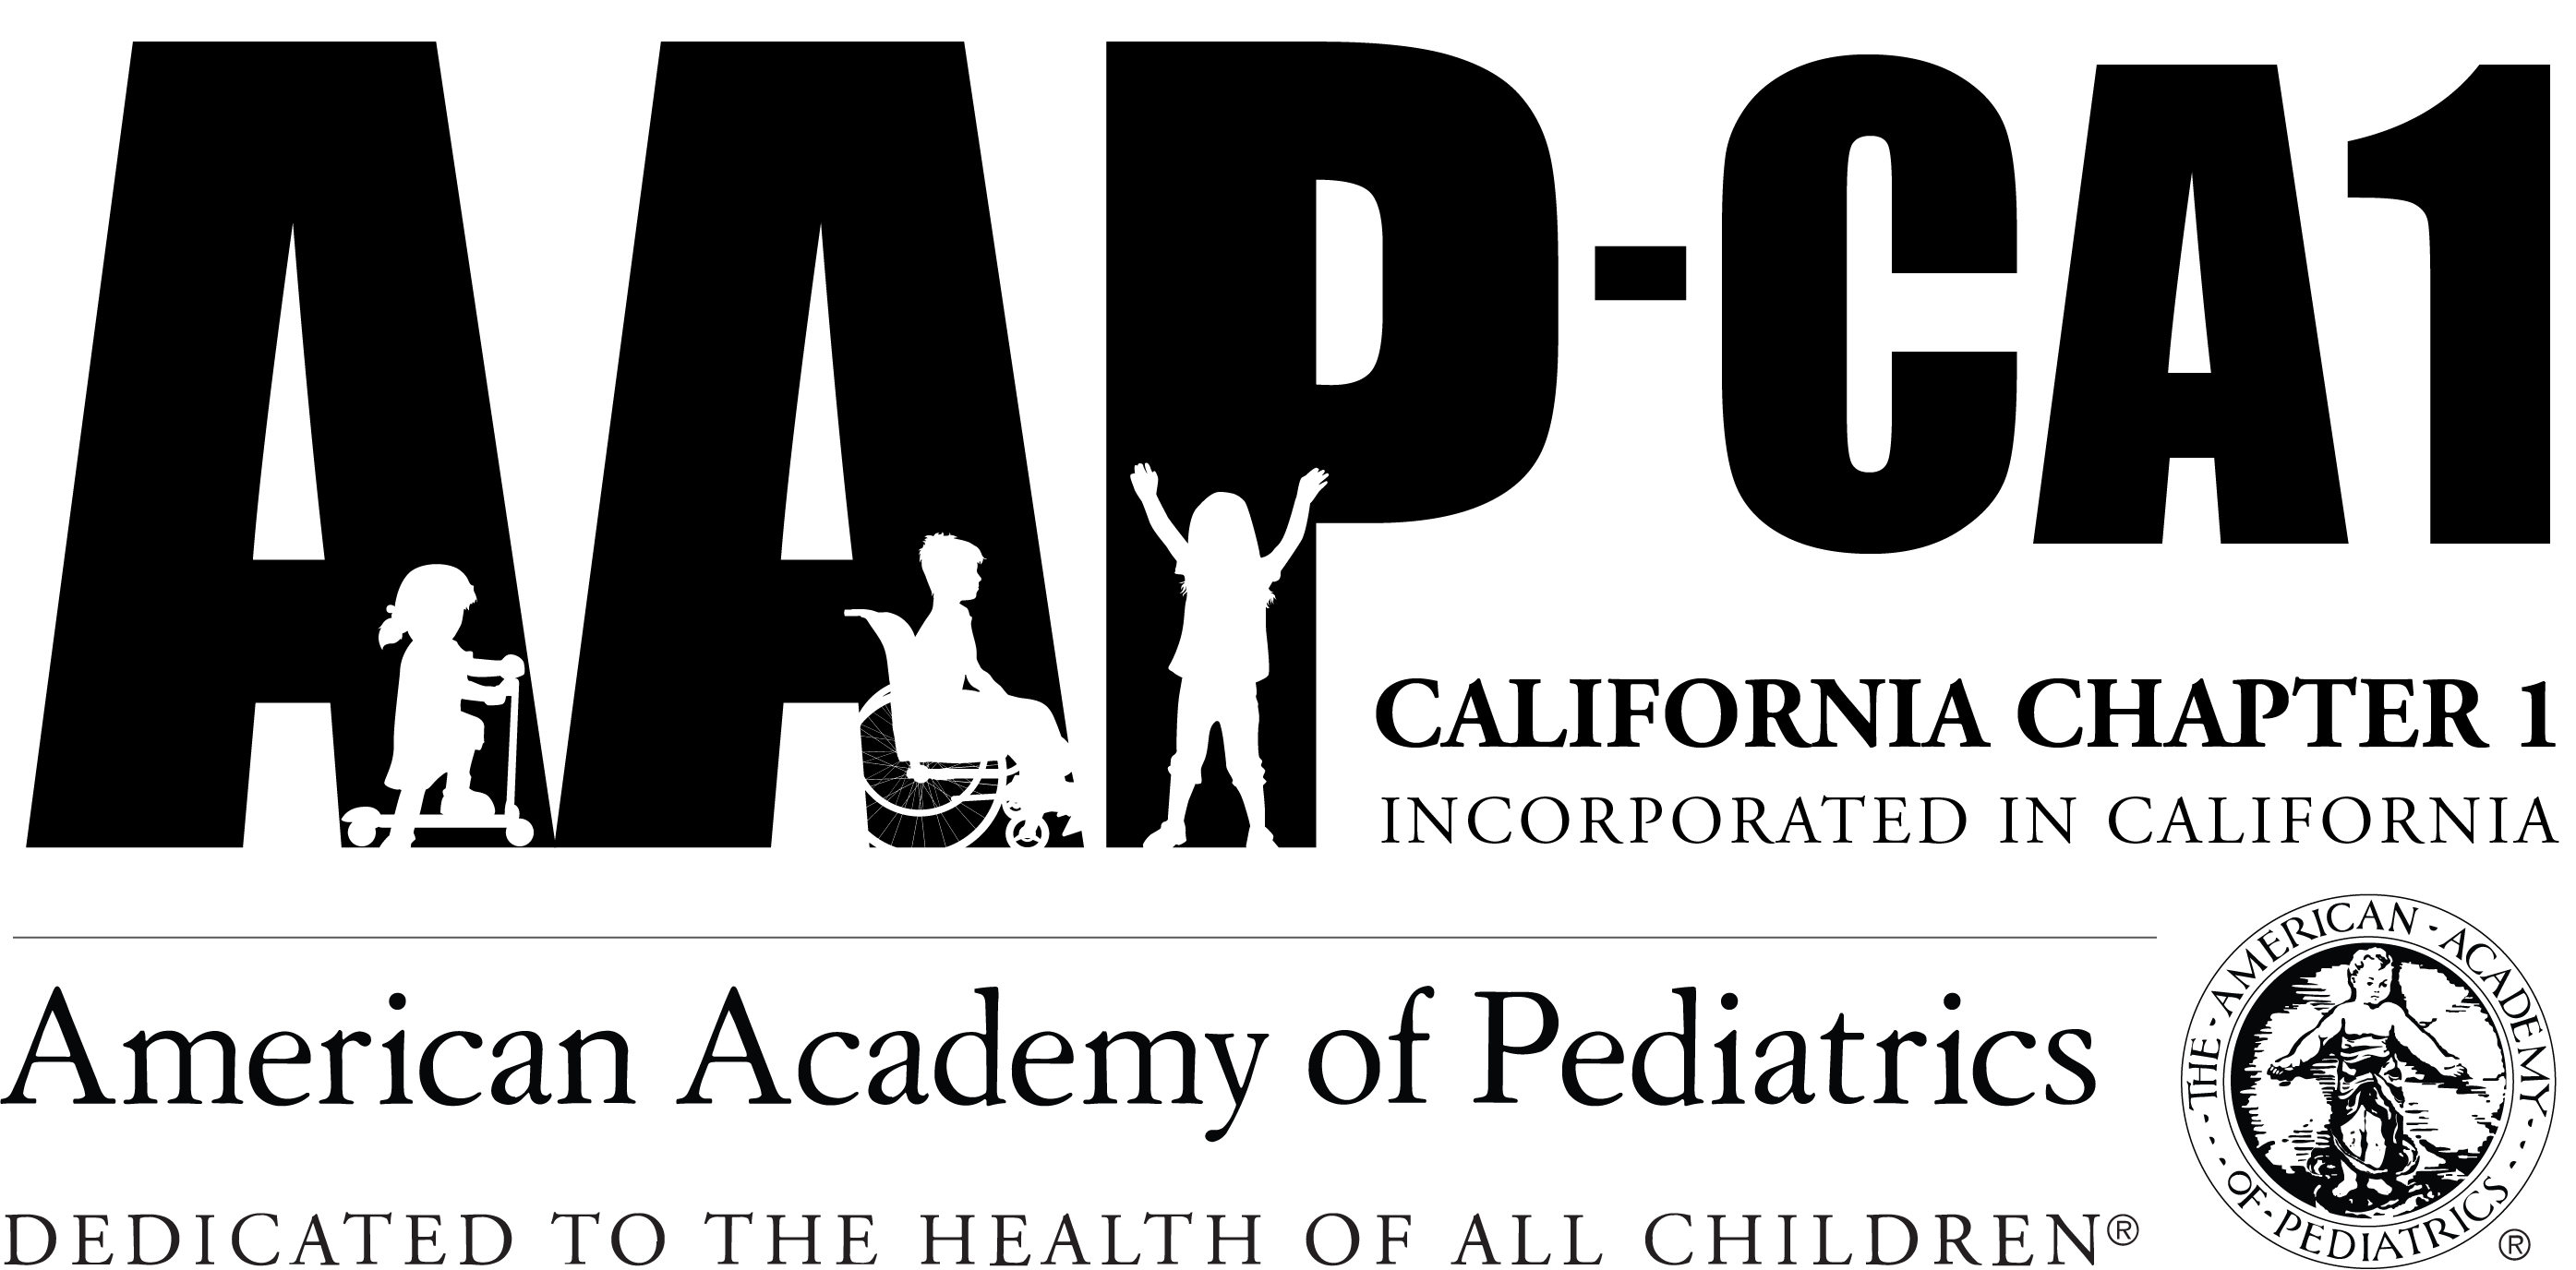 America Academy of Pediatrics CA Chapter 1 